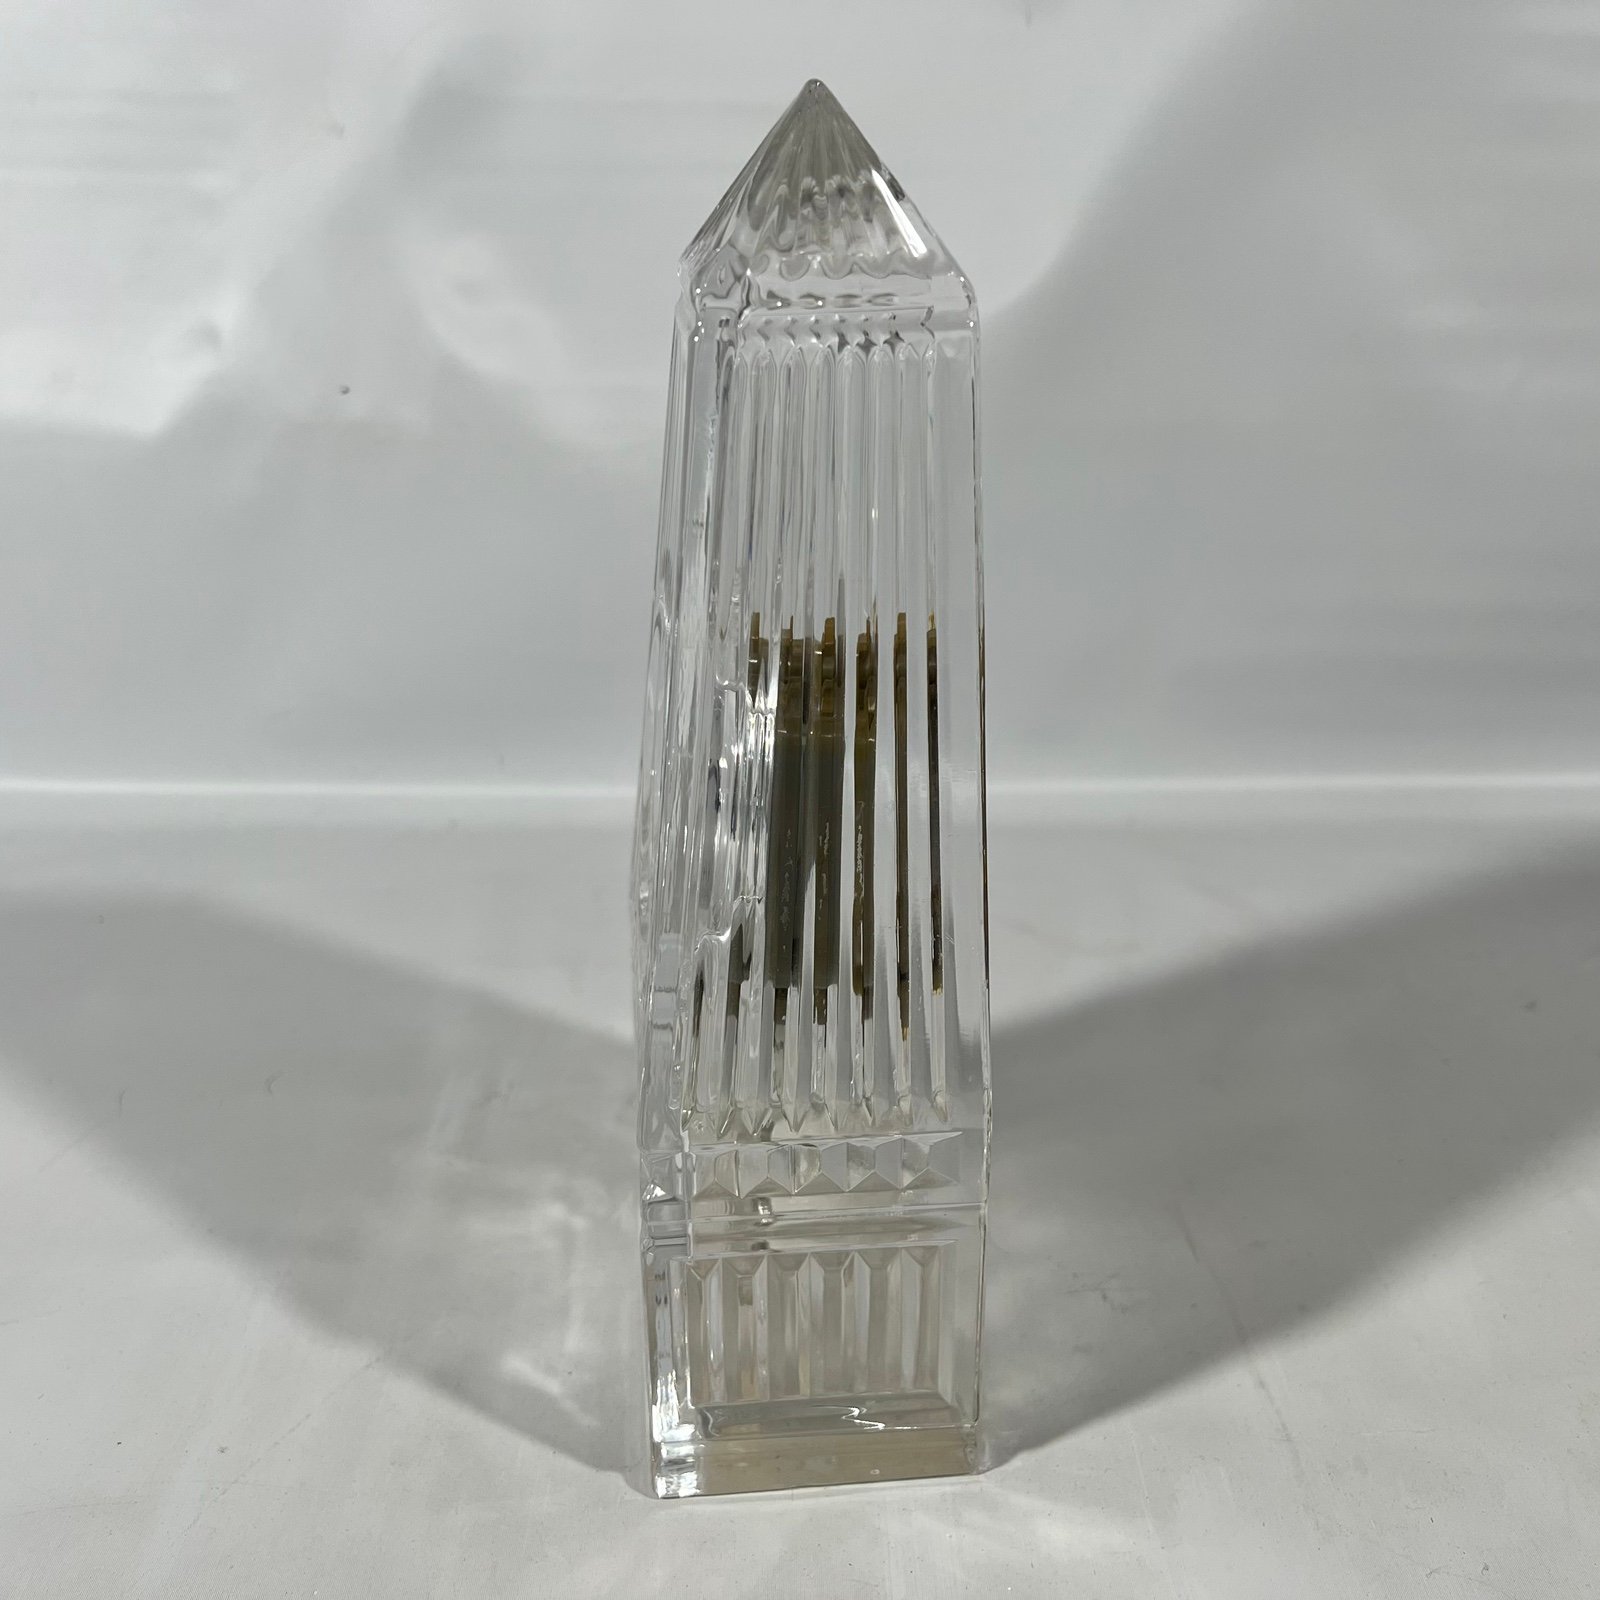 Vintage Crystal Time Piece Obelisk Pyramid Tower Shannon Quartz Clock g7jwol6bx